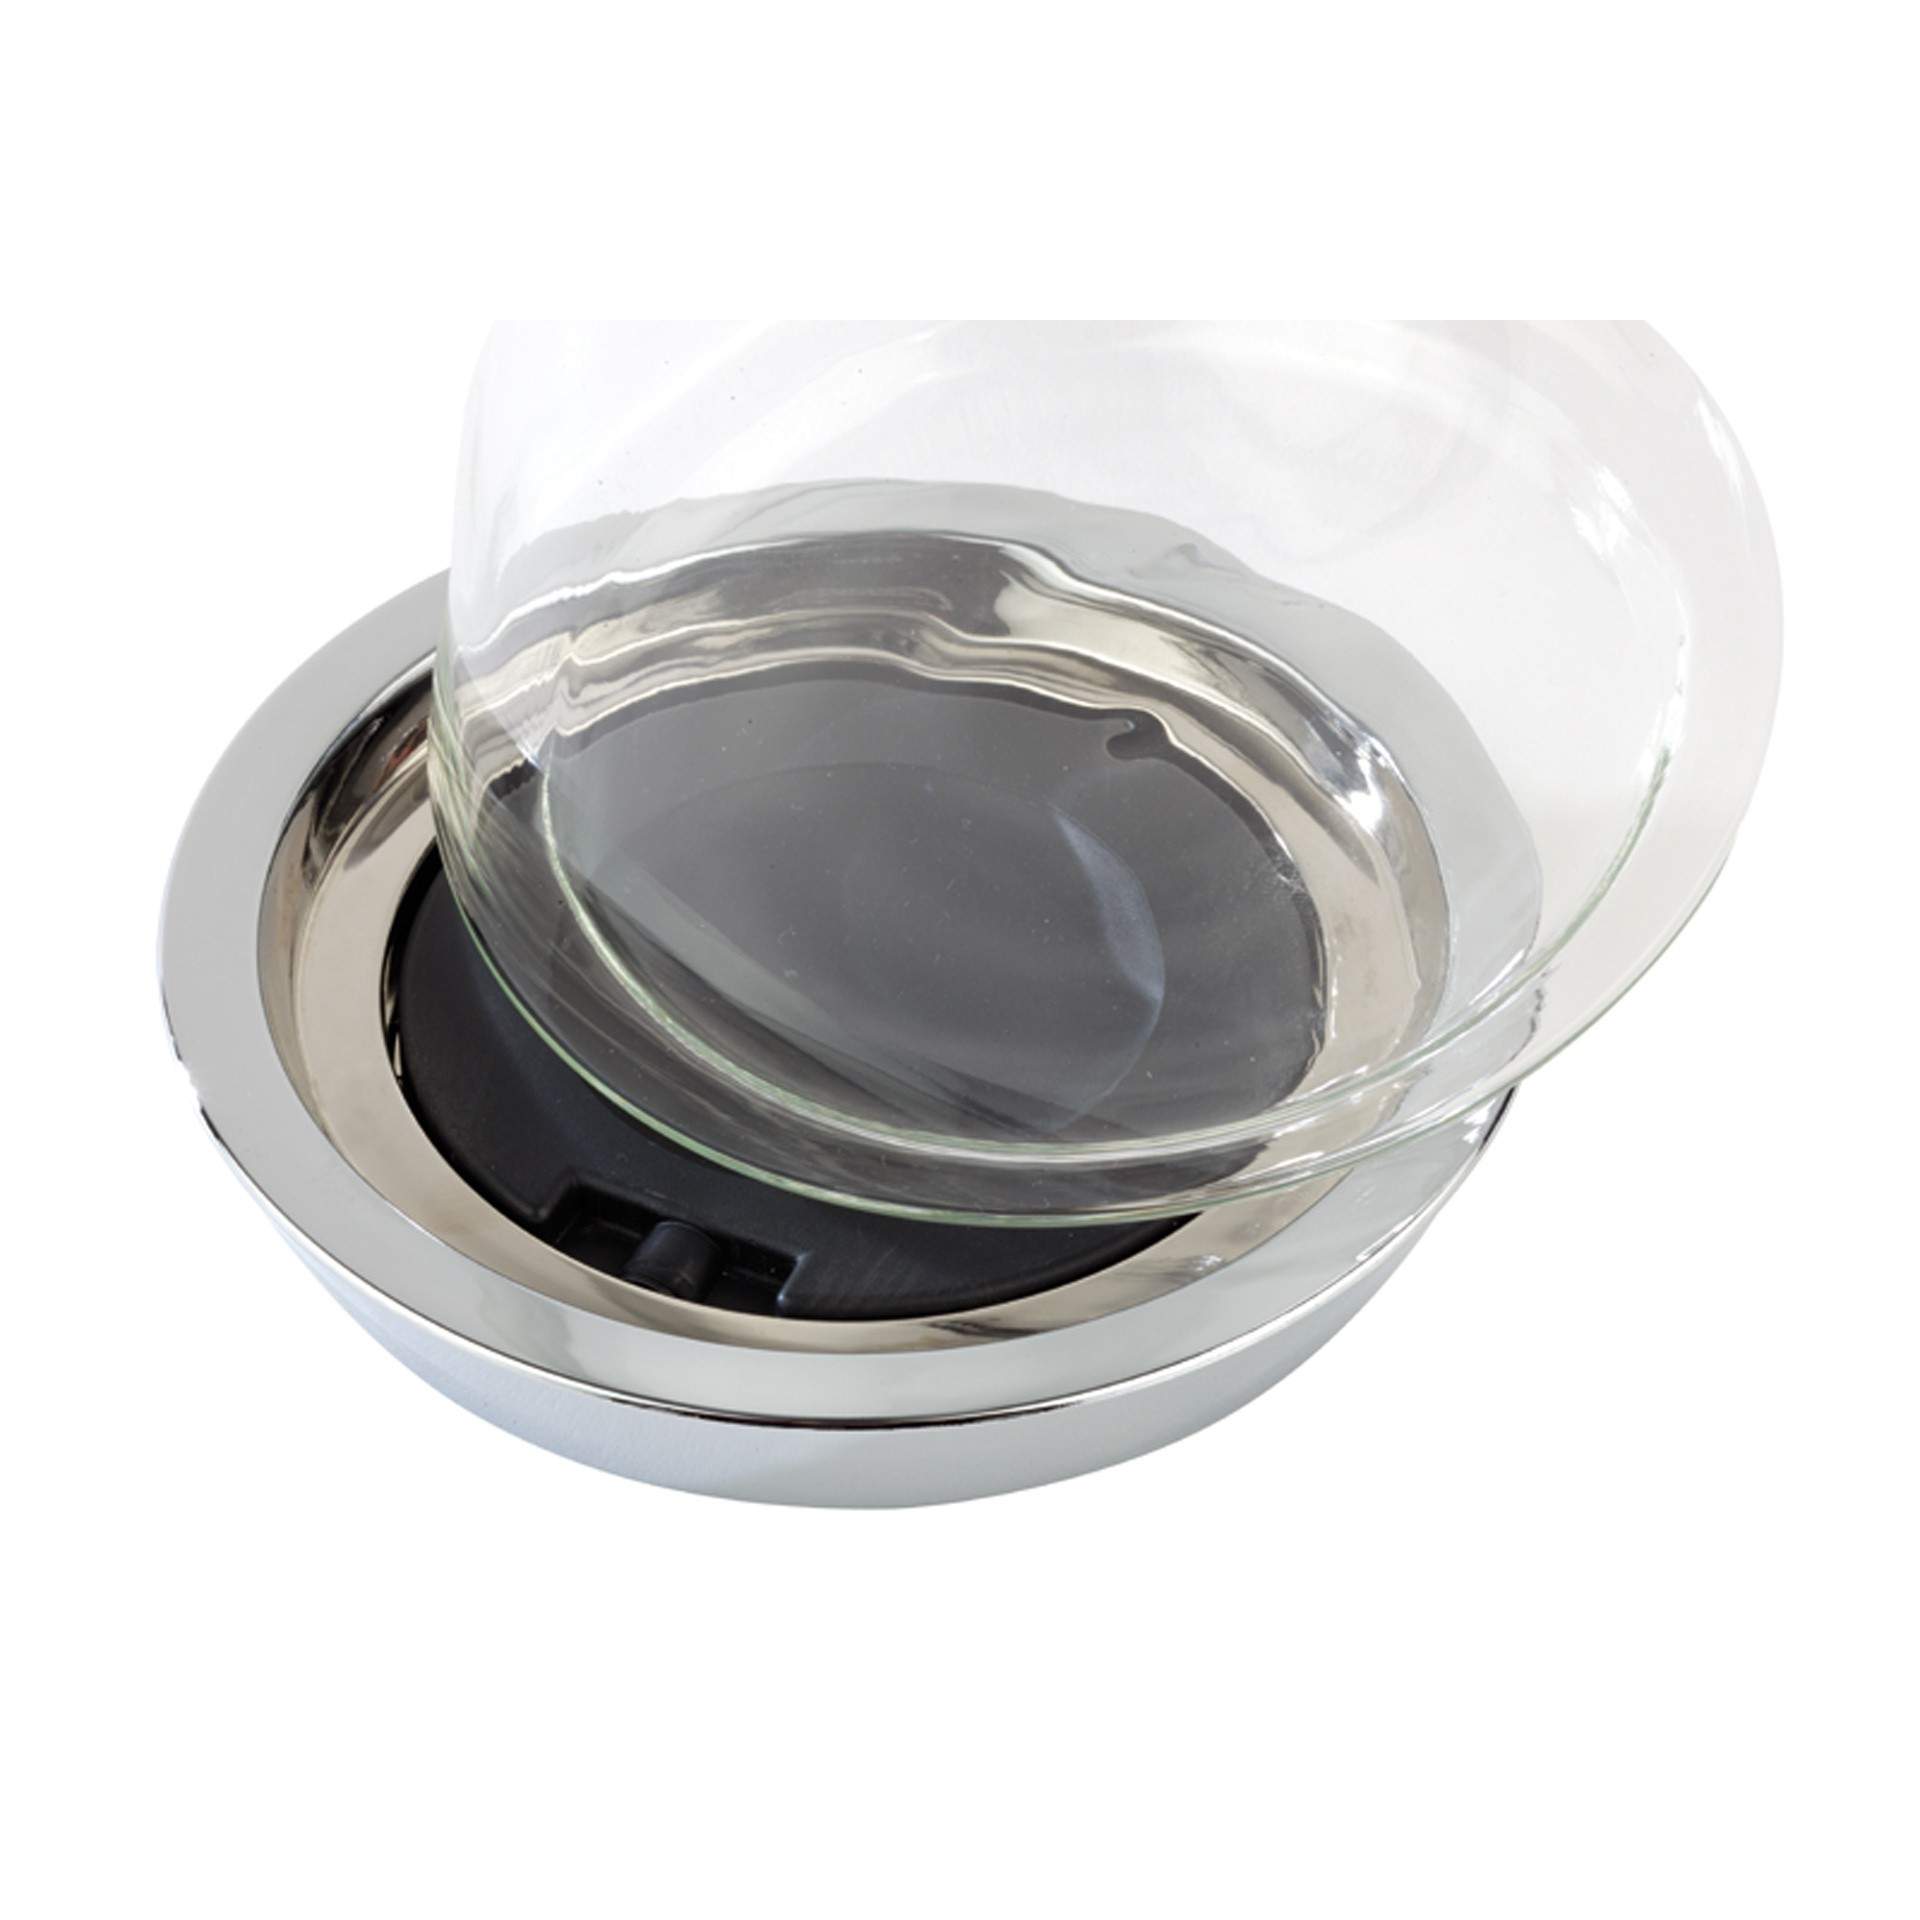 Kühlakku - gefüllt mit Kühlflüssigkeit - schwarz - Abm. 2,0 cm - Ø 10,5 cm - Kunststoff - 10752-B